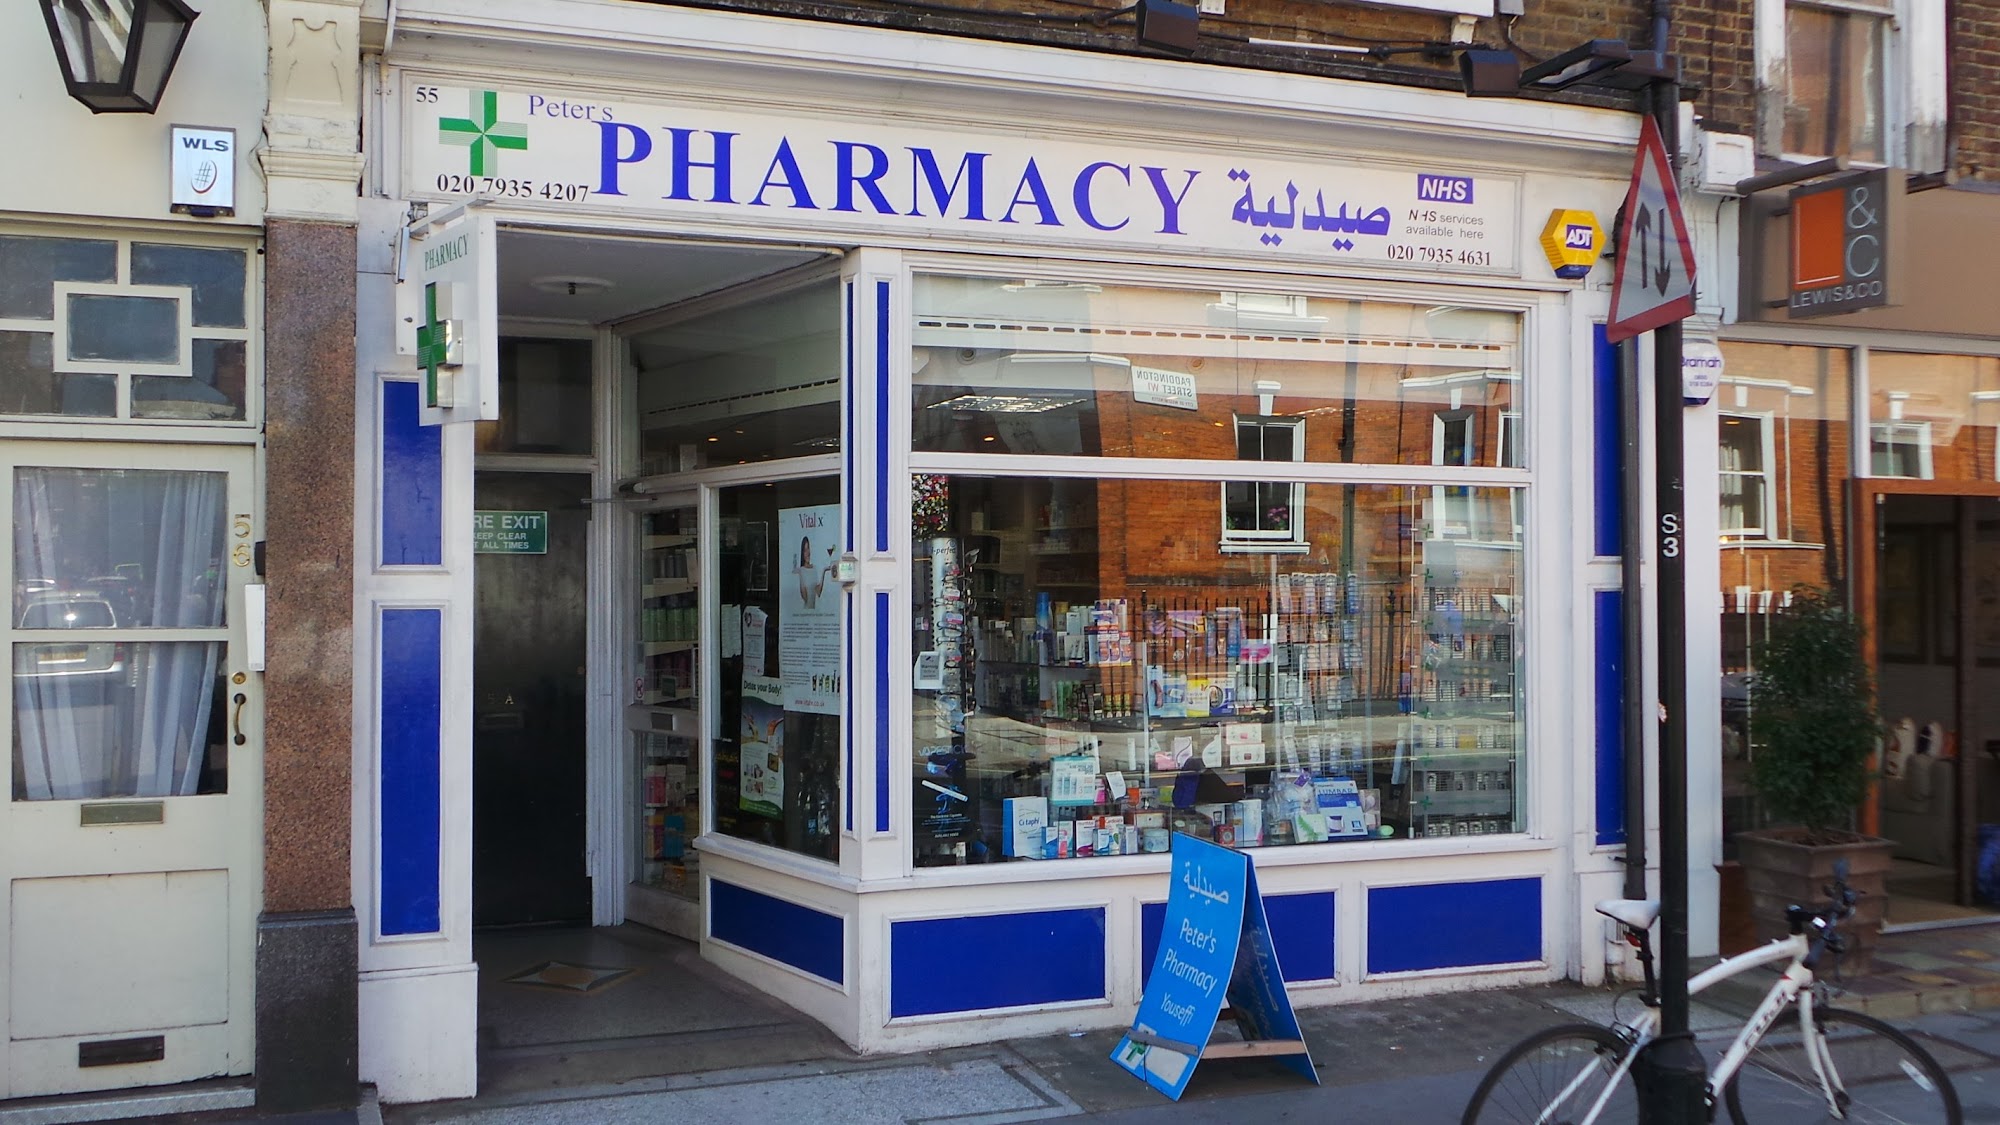 NDY Peters Pharmacy